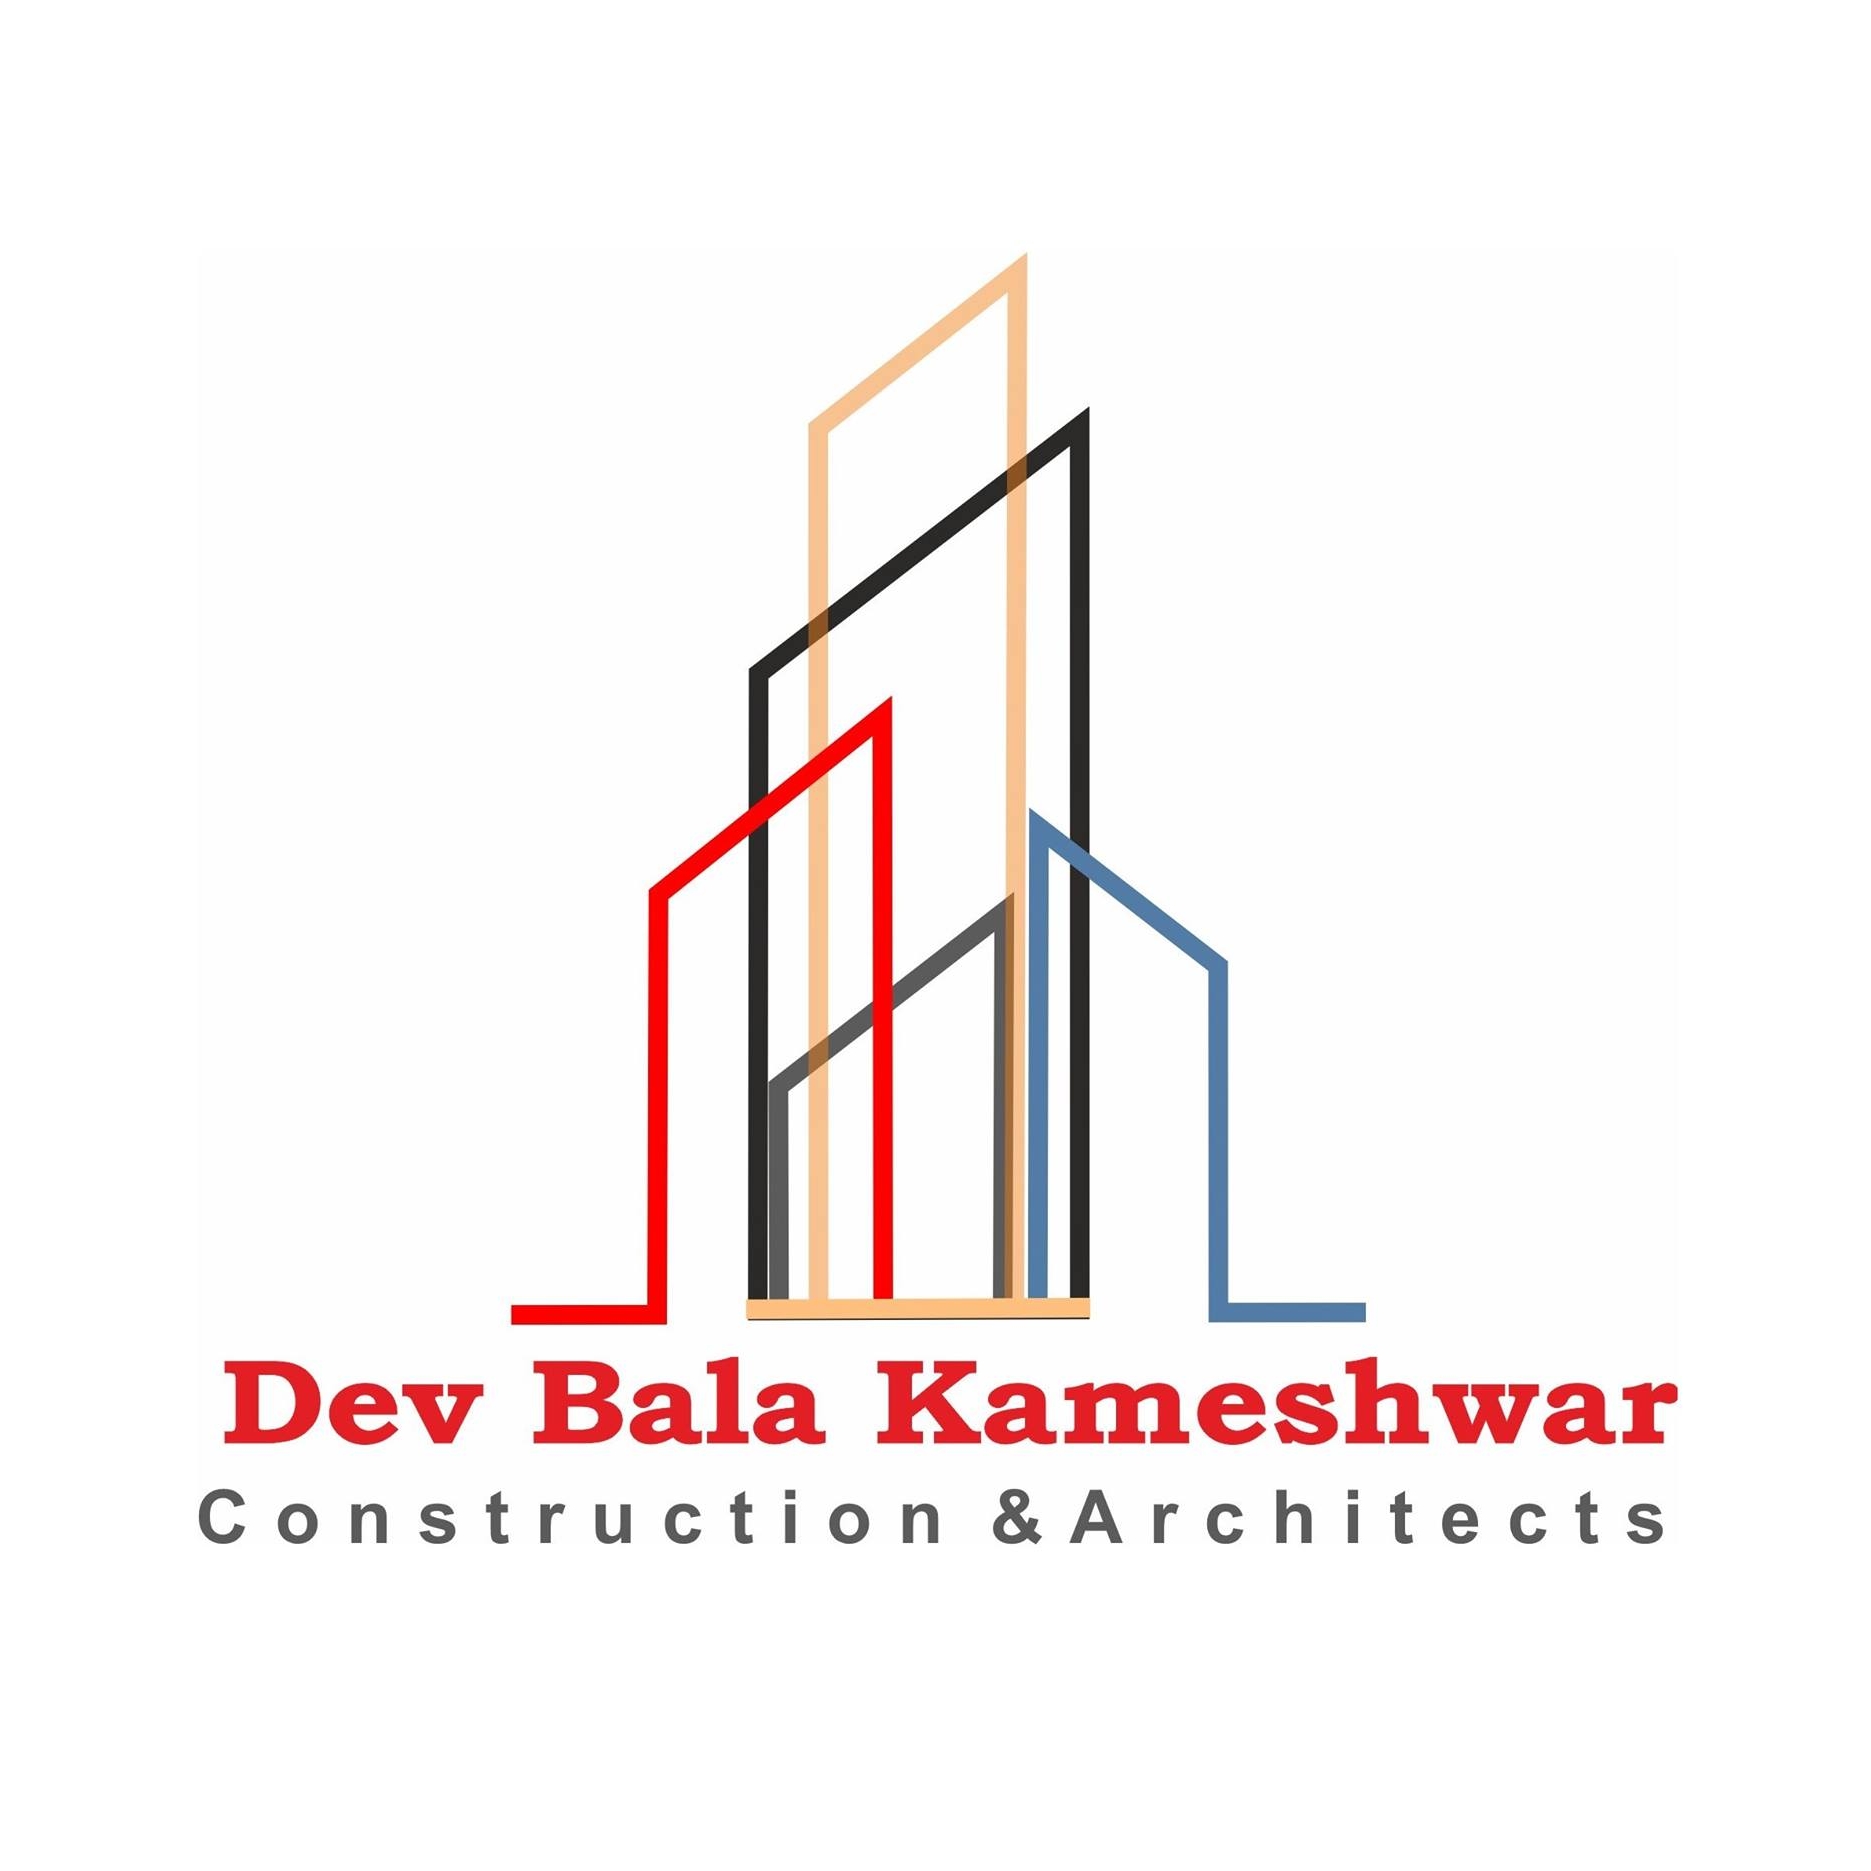 Dev Bala Kameshwar Construction and Architects - Logo